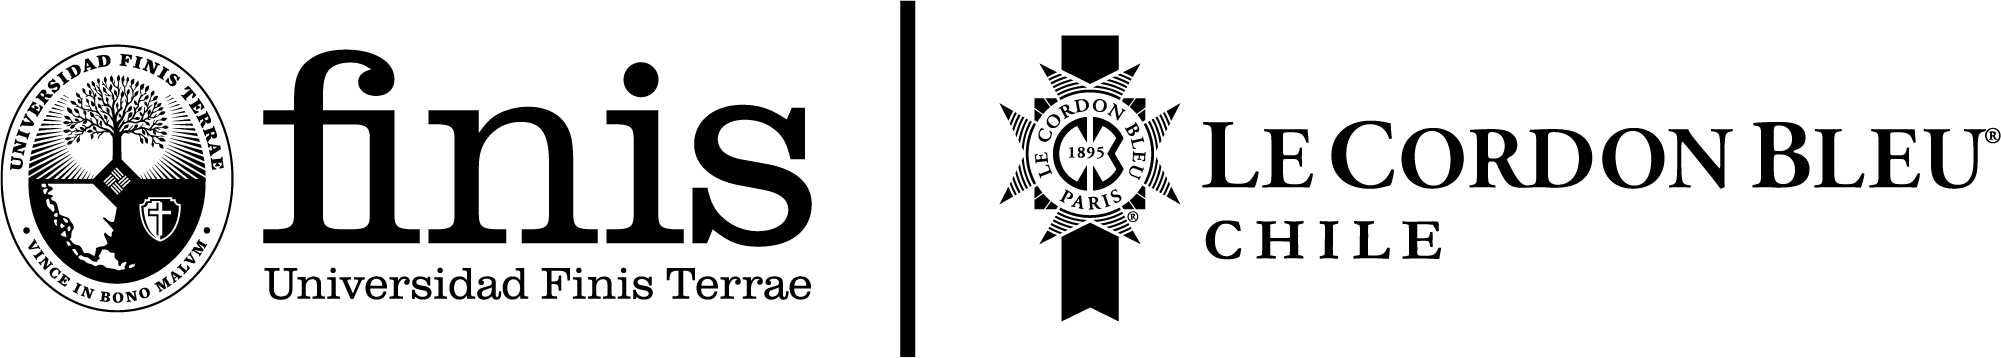 Logo Escudo Finis Negro